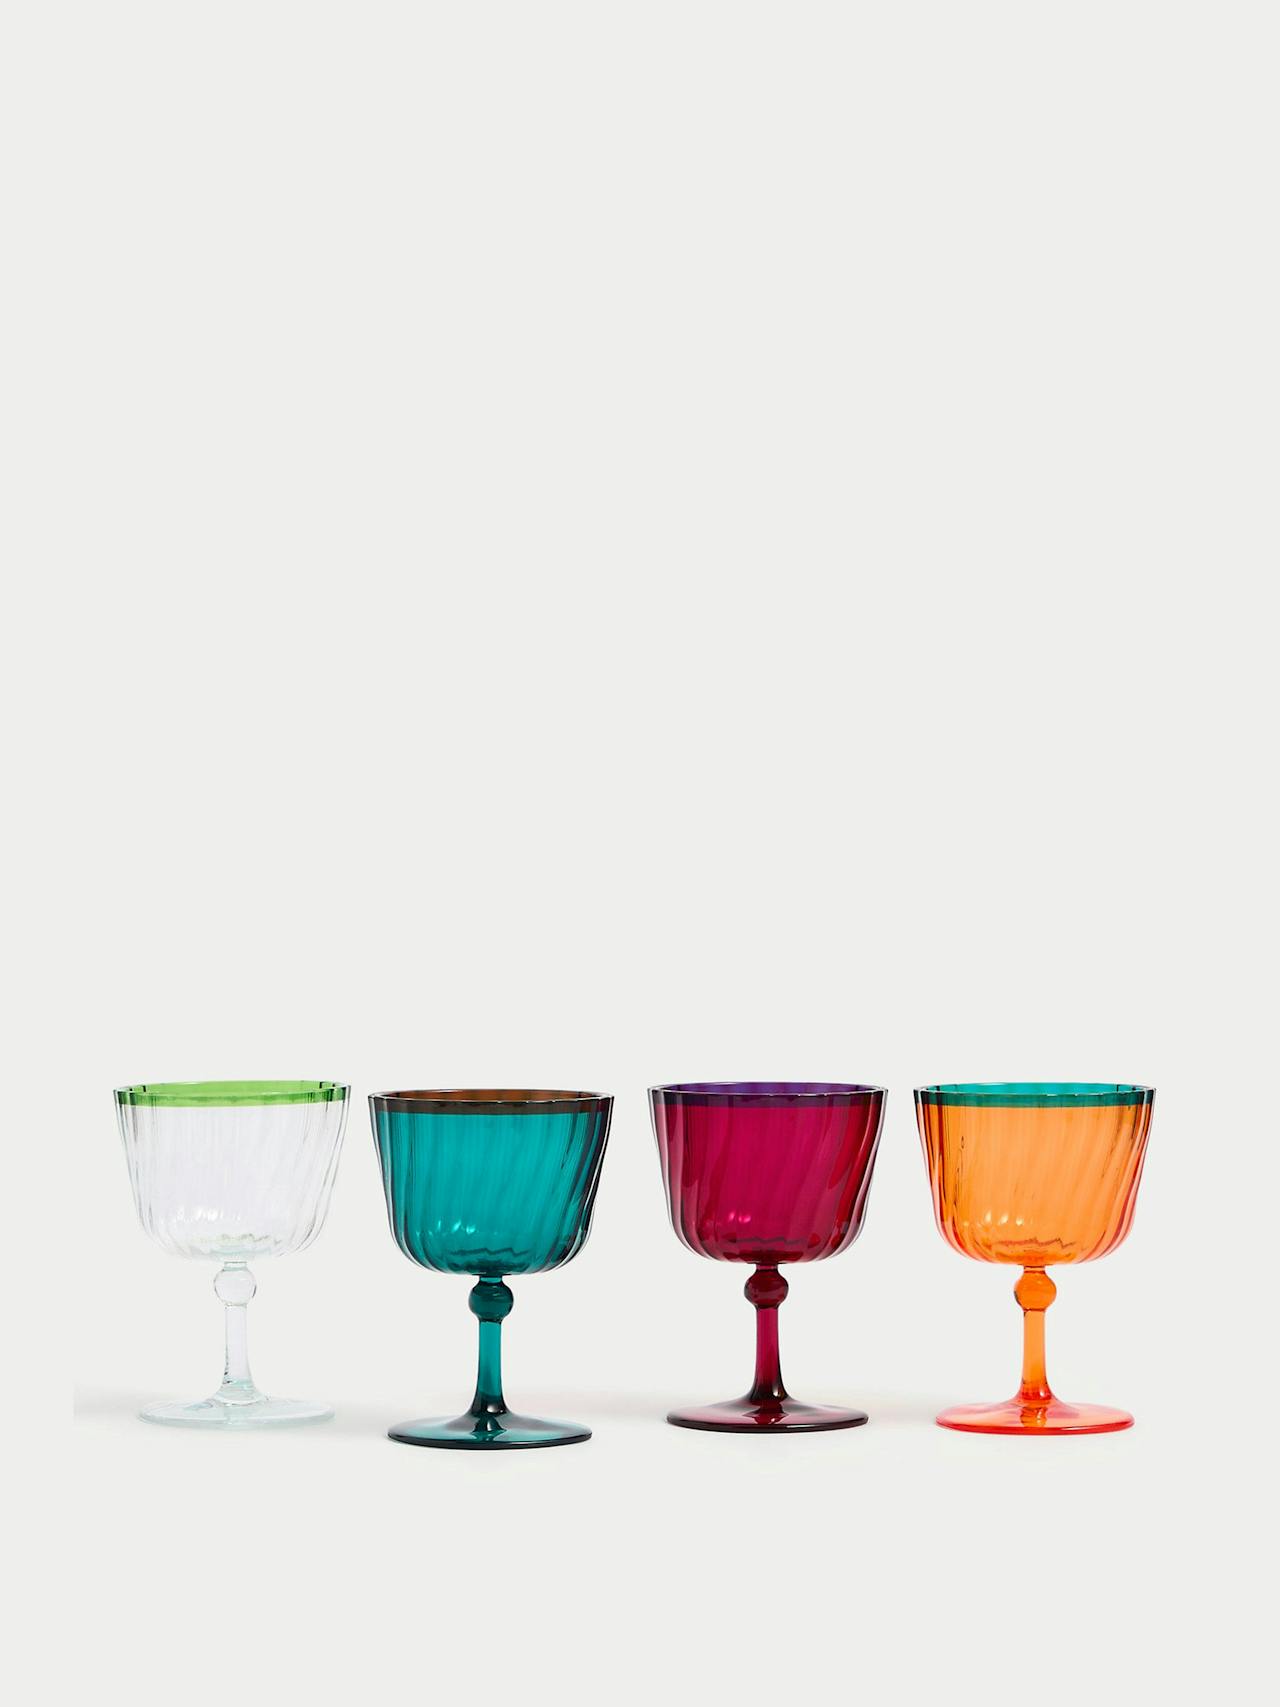 Ikat brights two-tone wine glasses (set of 4)